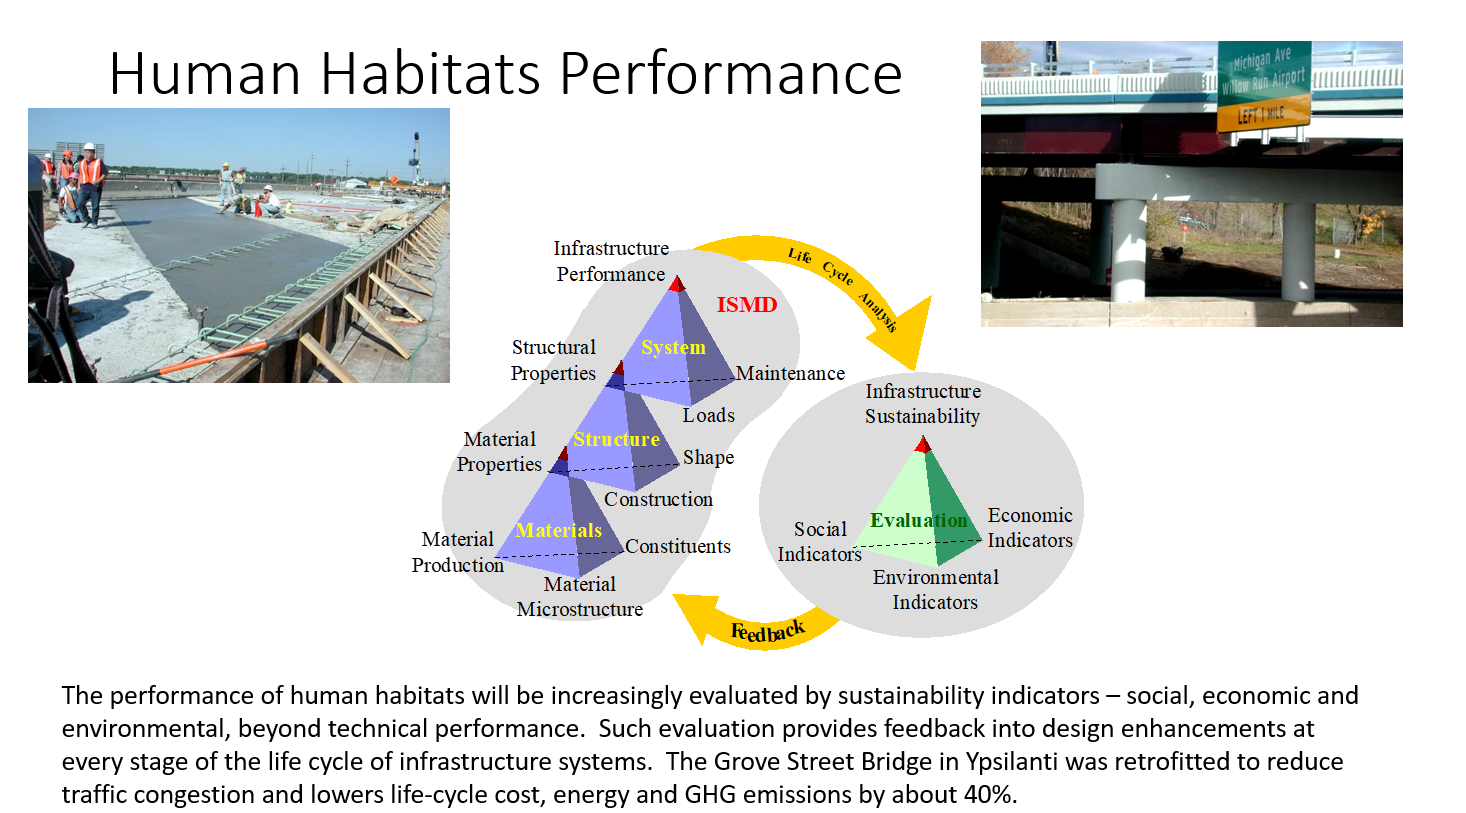 Human Habitats Performance